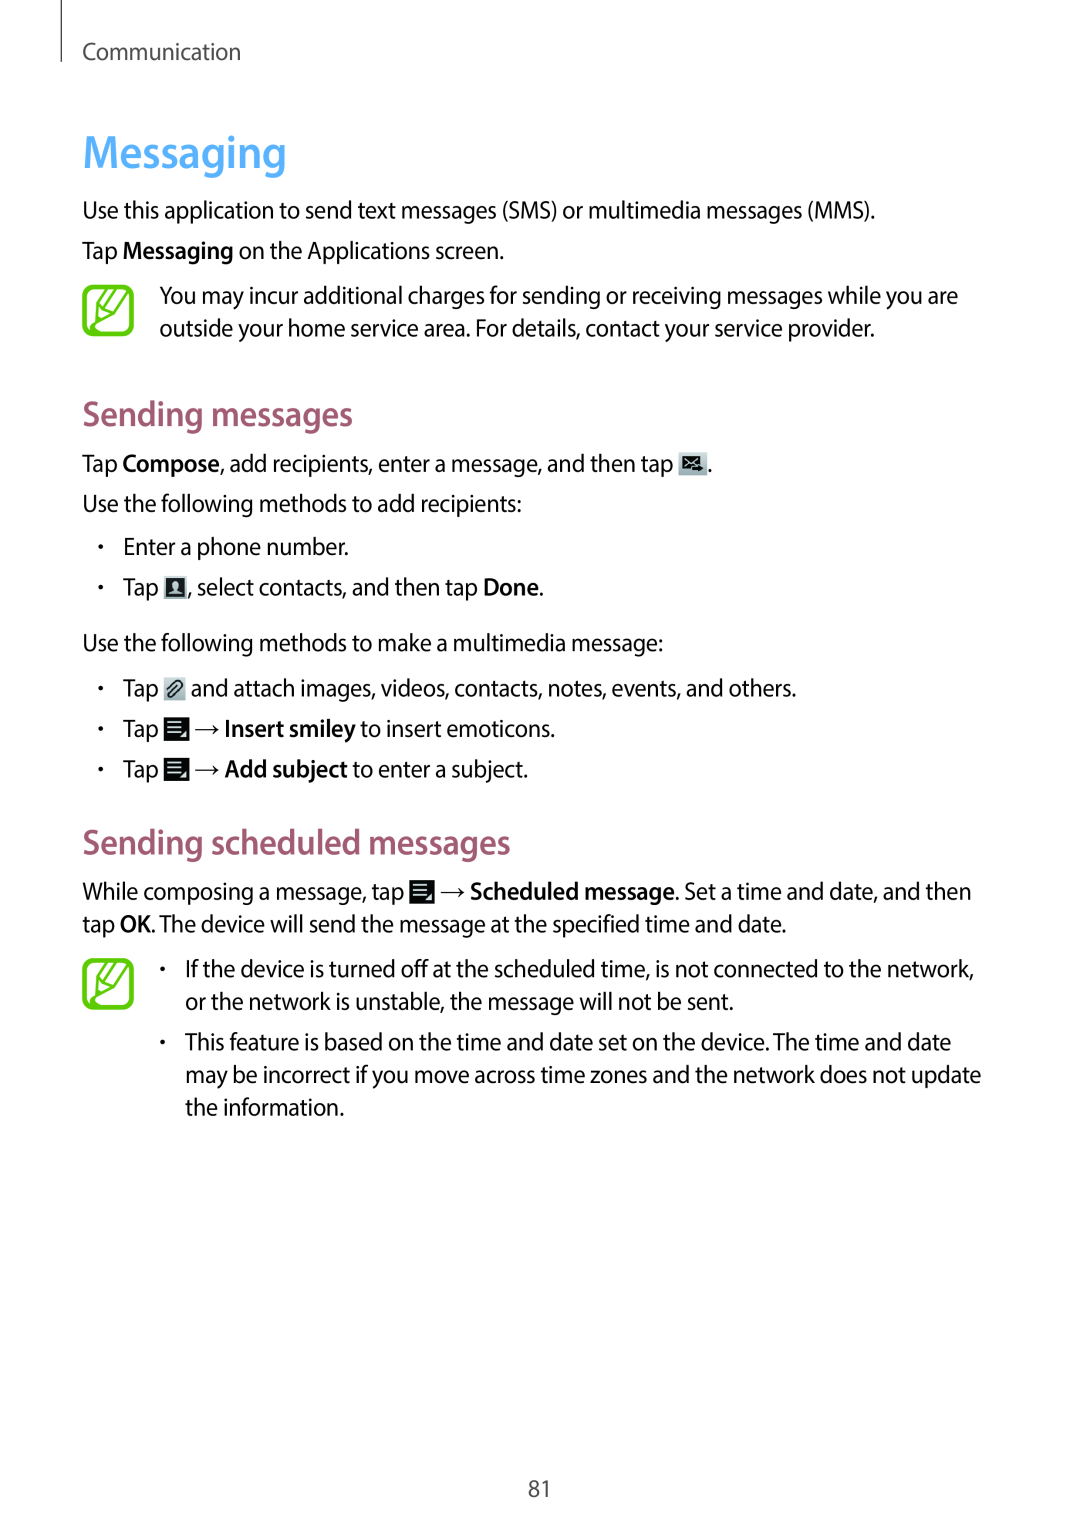 Samsung EK-GC100 user manual Messaging, Sending messages, Sending scheduled messages, Communication 